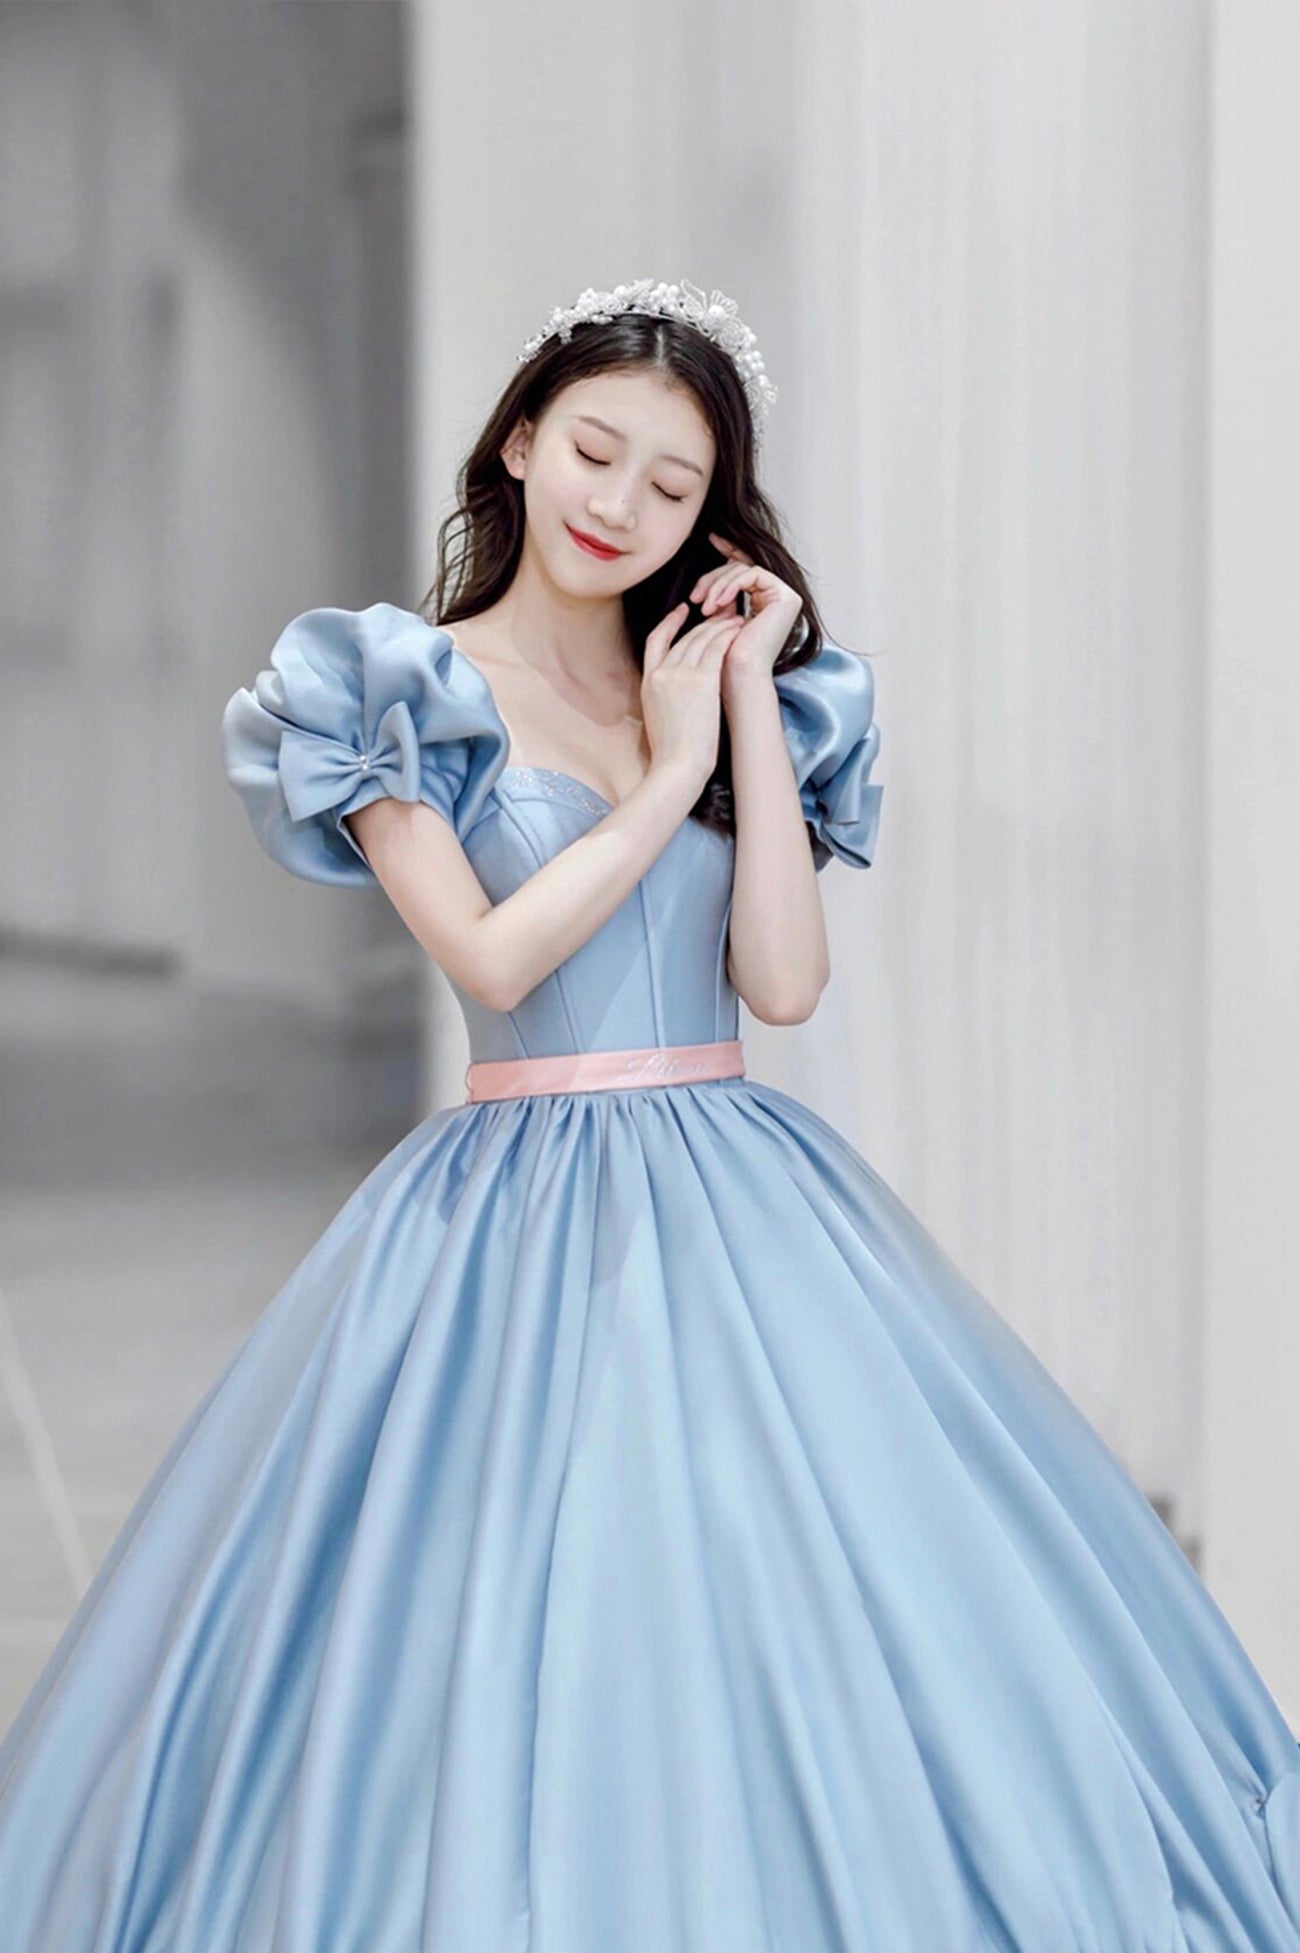 Blue Satin A-Line Princess Dress, Blue A-Line Evening Gown with Bow ...